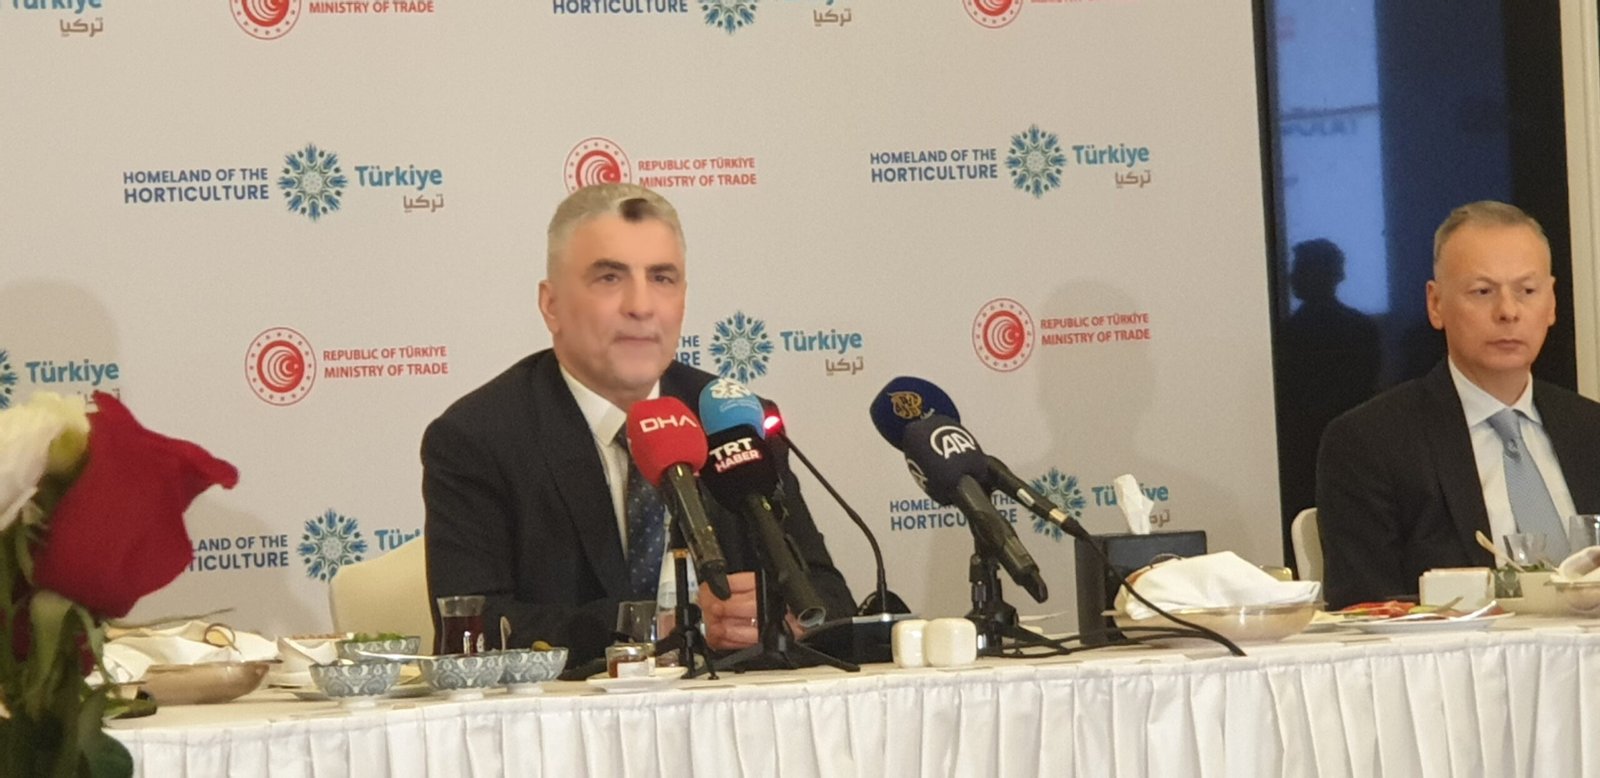 Qatar: Like World Cup, Qatar Will Host A Successful Expo Doha,  Turkish Minister